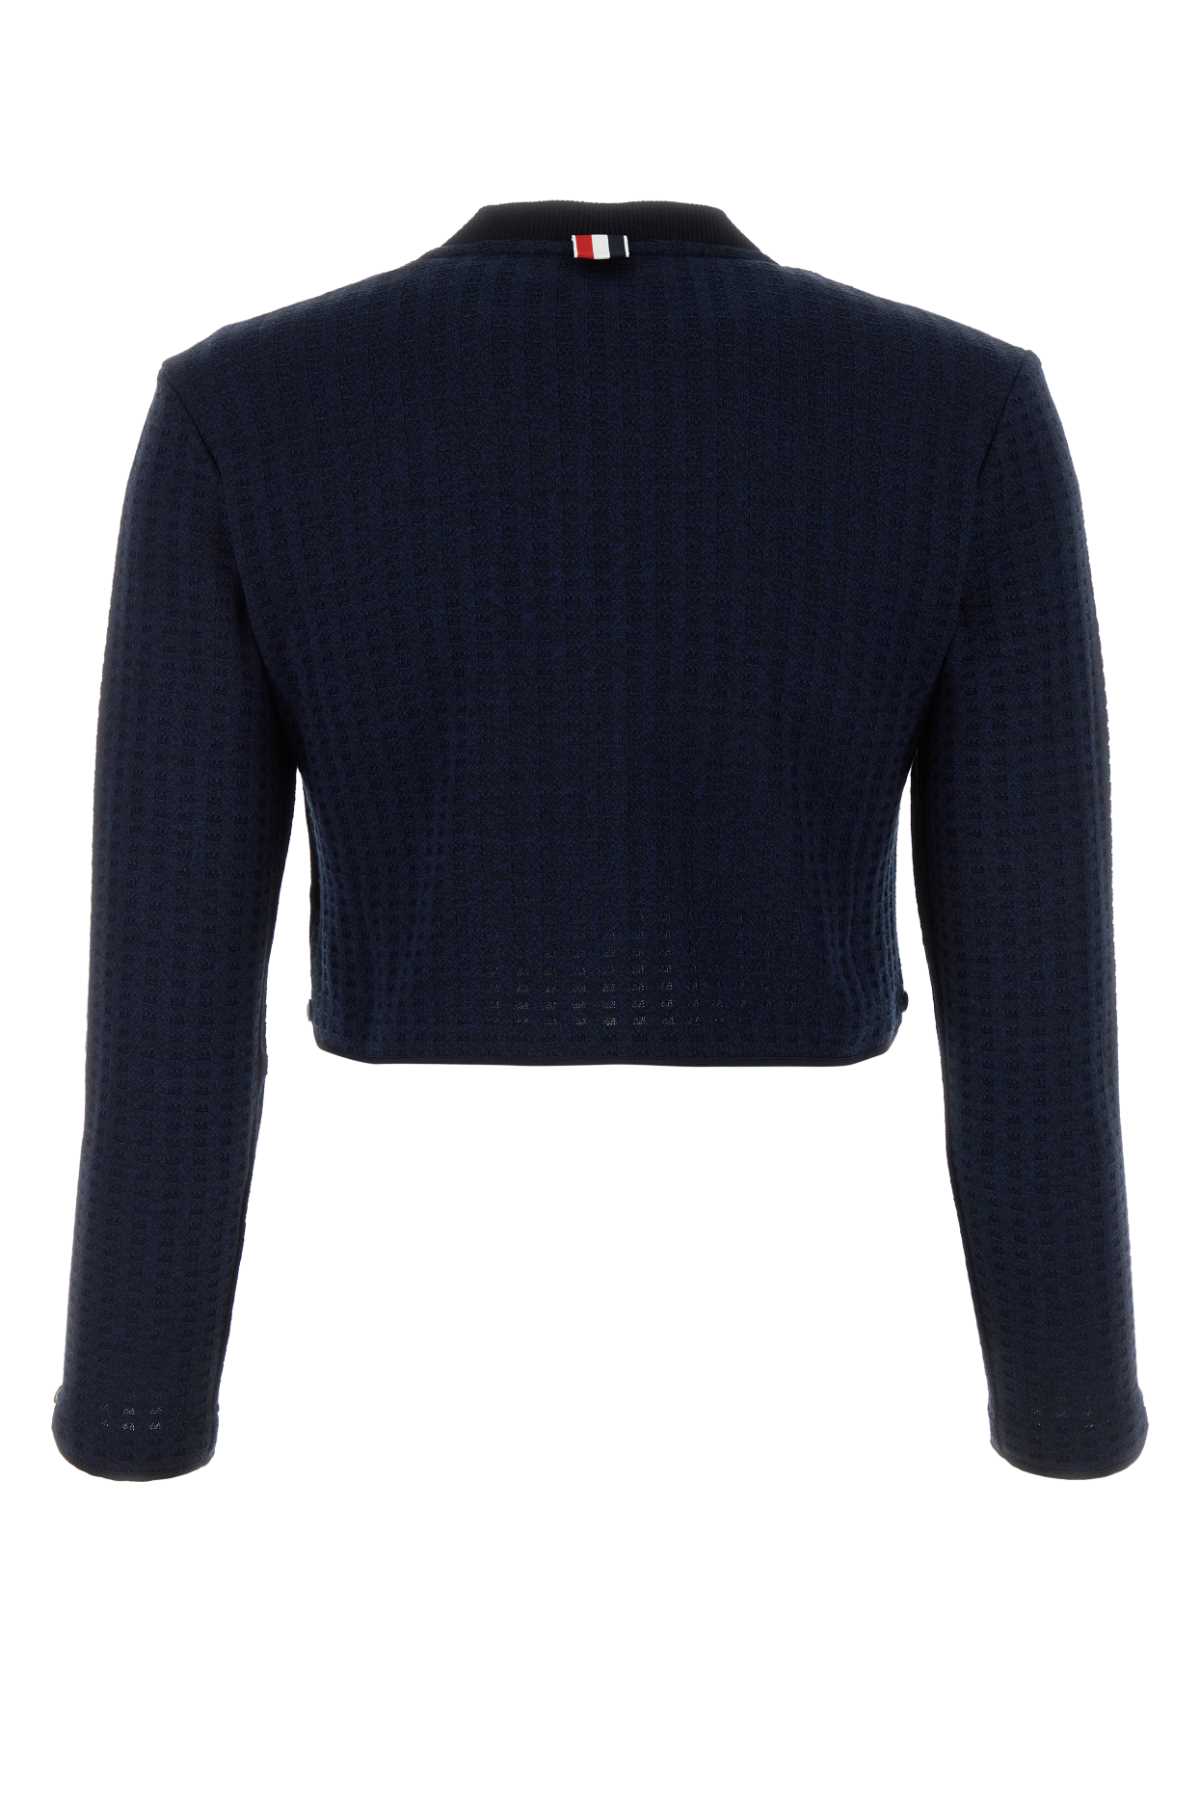 Shop Thom Browne Navy Blue Cotton Cardigan